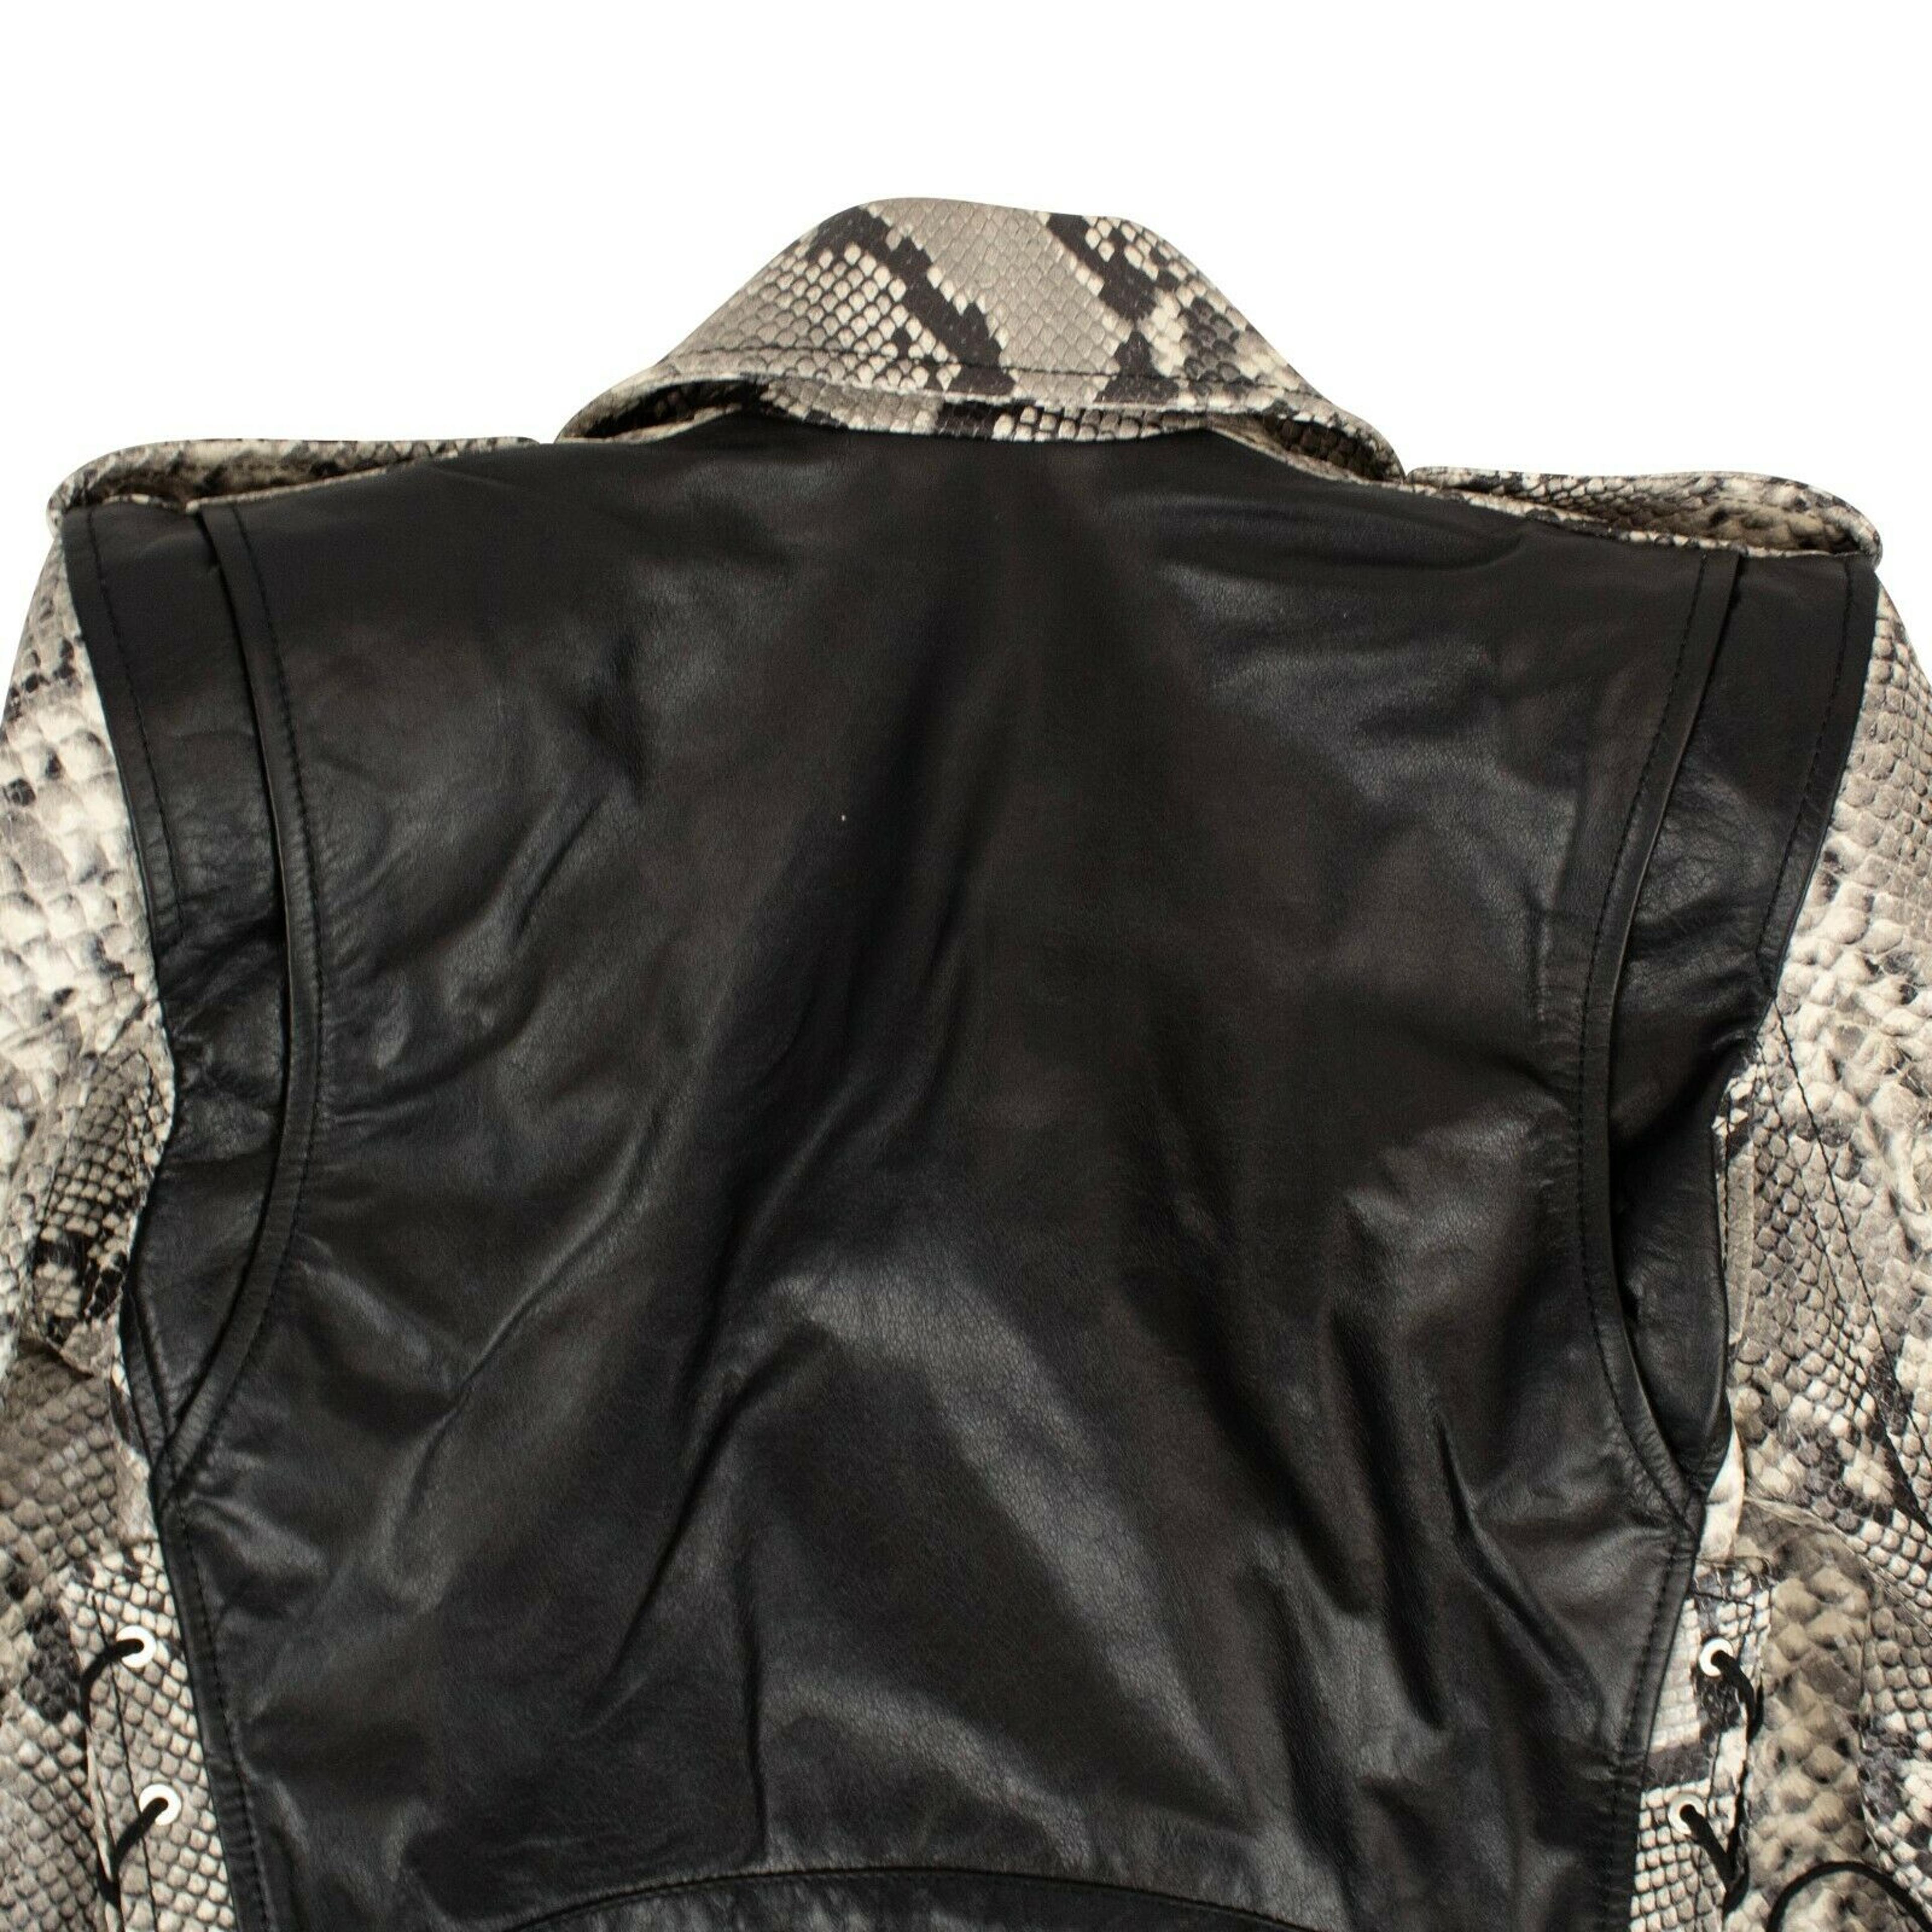 Alternate View 3 of Gray Leather Snakeskin Print Biker Jacket